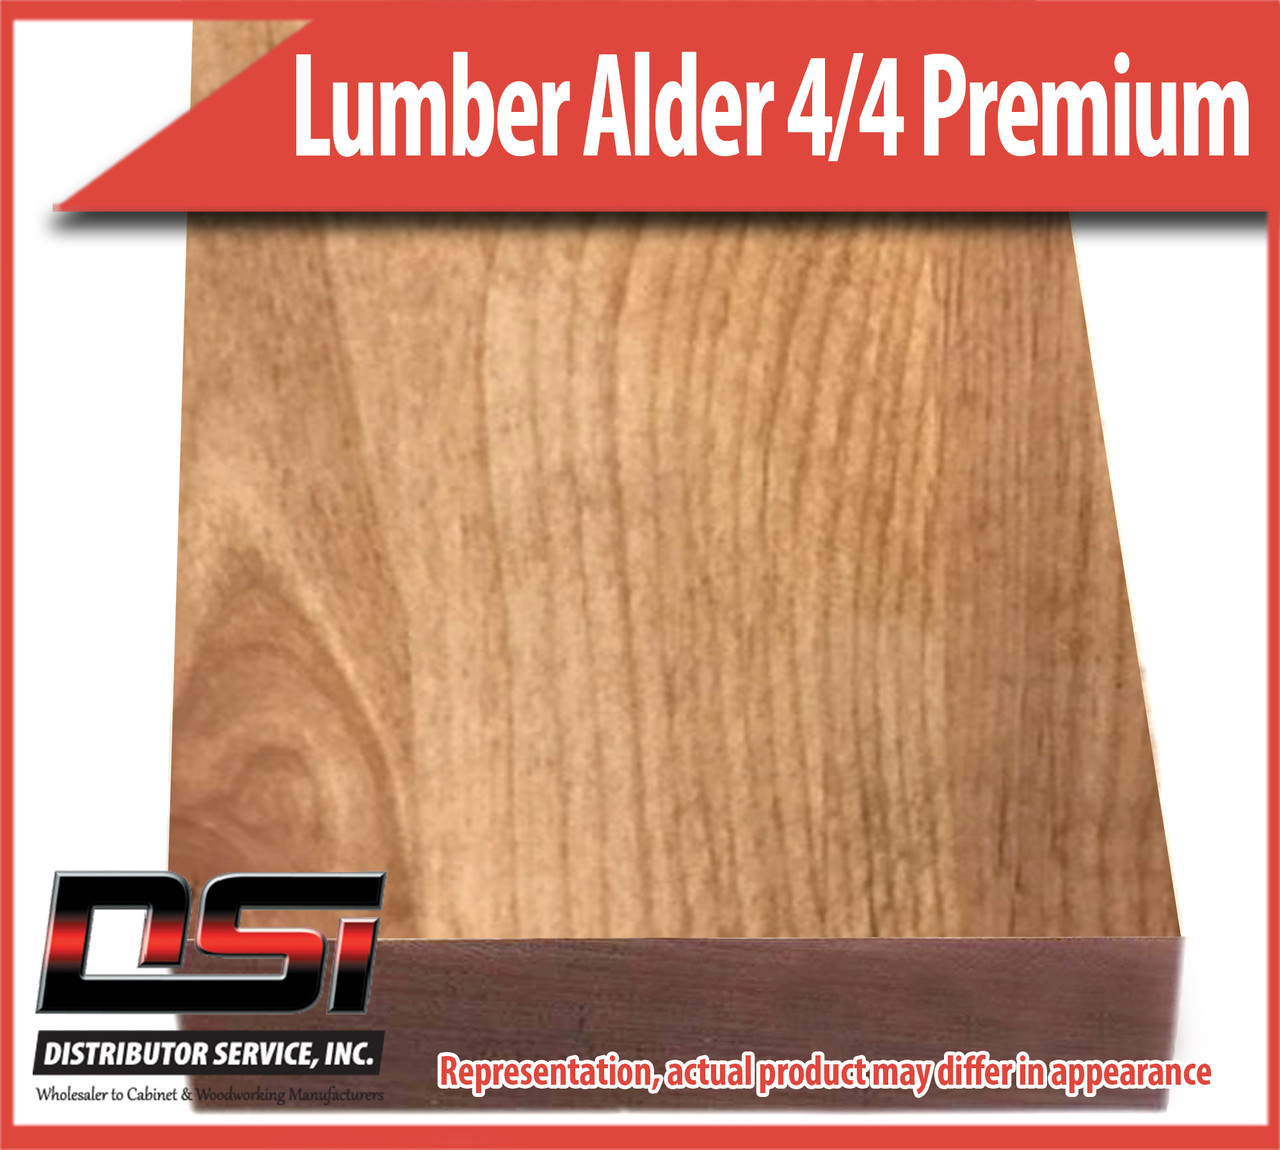 Domestic Hardwood Lumber Alder 4/4 Premium Frame 15/16" 8'